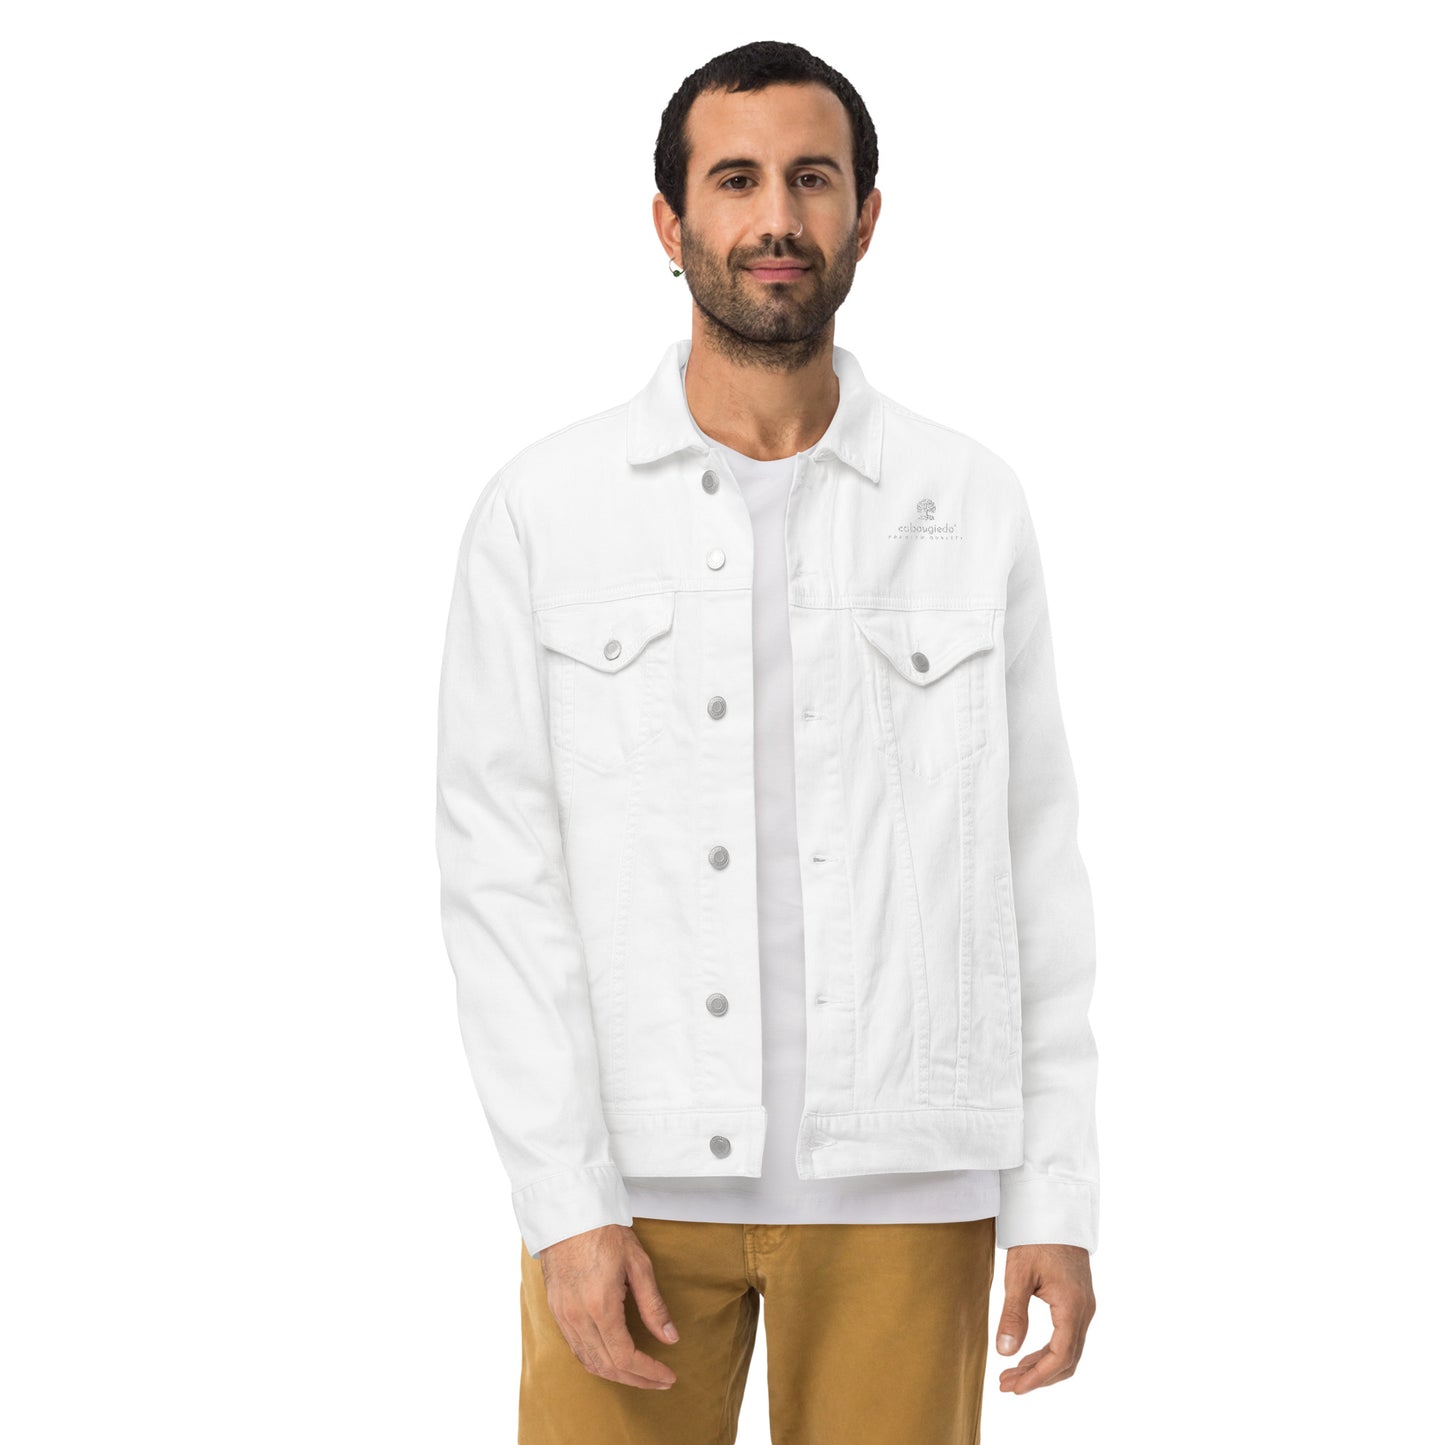 Unisex denim jacket - CaBougieDo Premium Quality